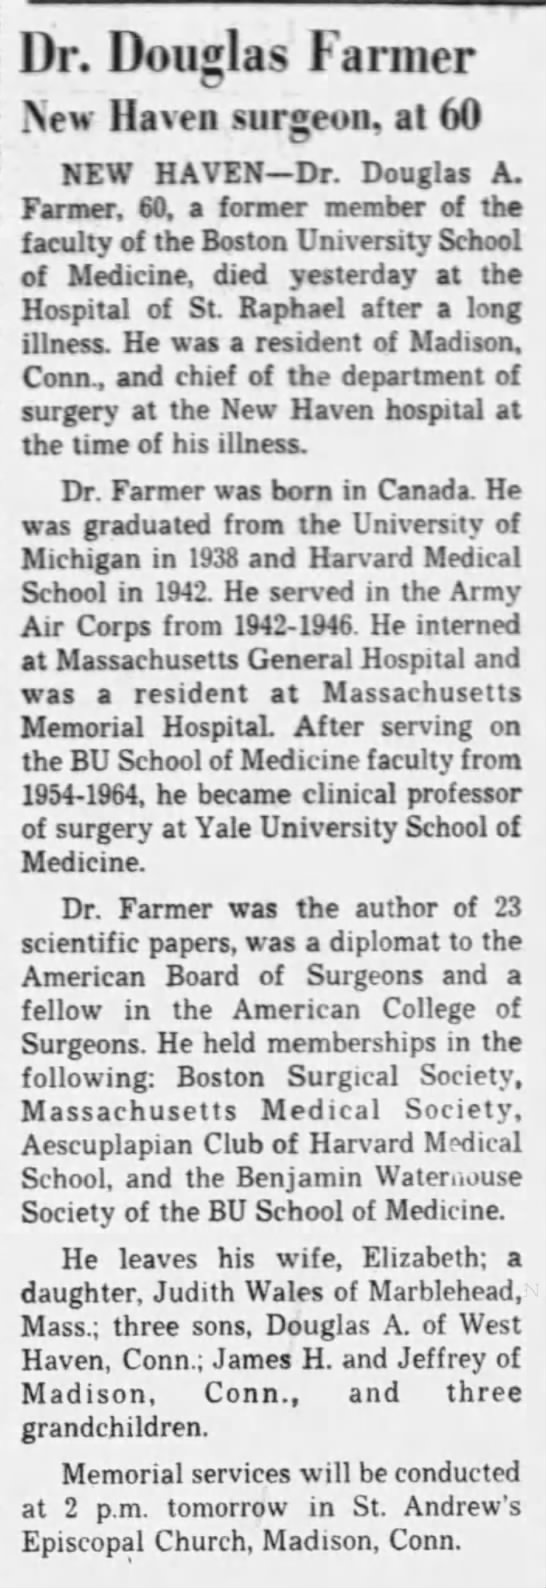 Dr. Douglas Farmer New Haven surgeon, at 60 - 